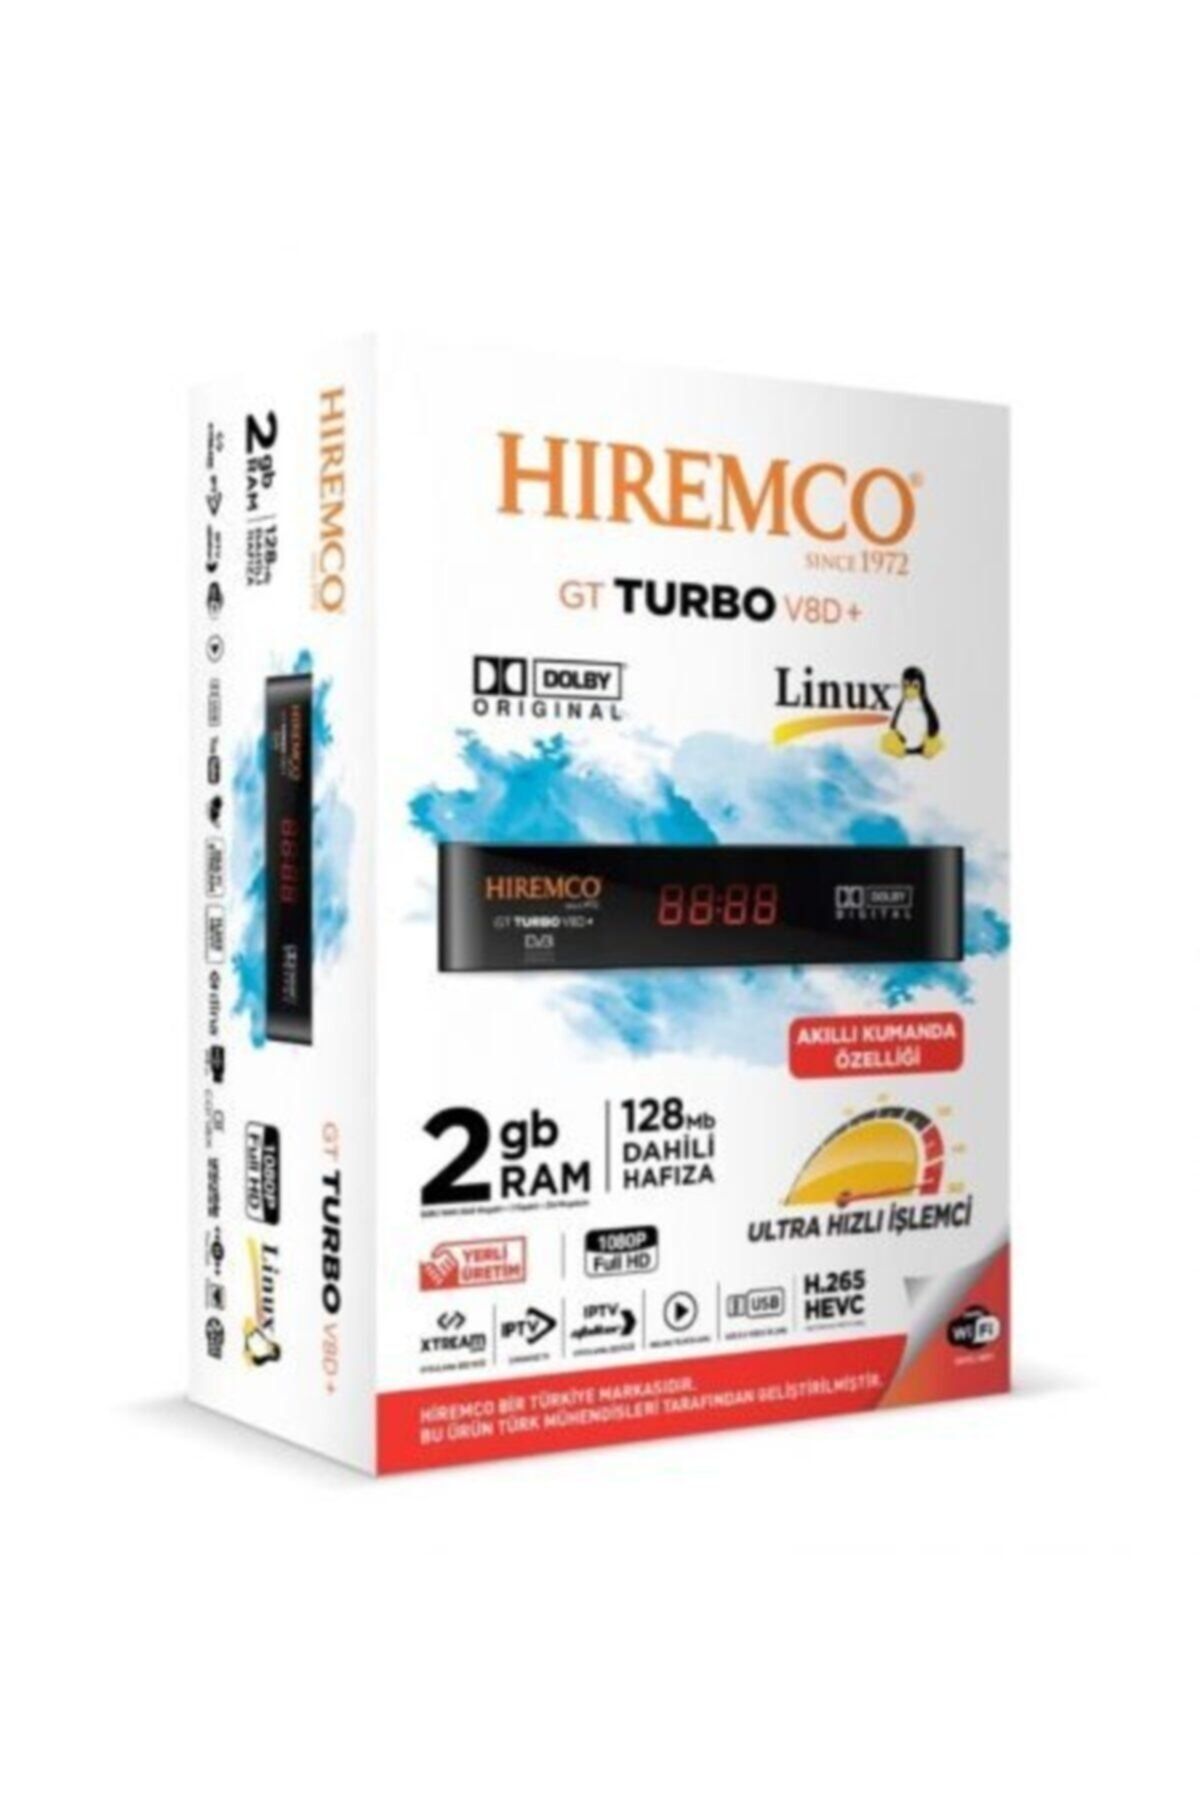 Hiremco Gt Turbo V8d+ Plus Dahili Wifili Iptv-linux Uydu Alıcısı